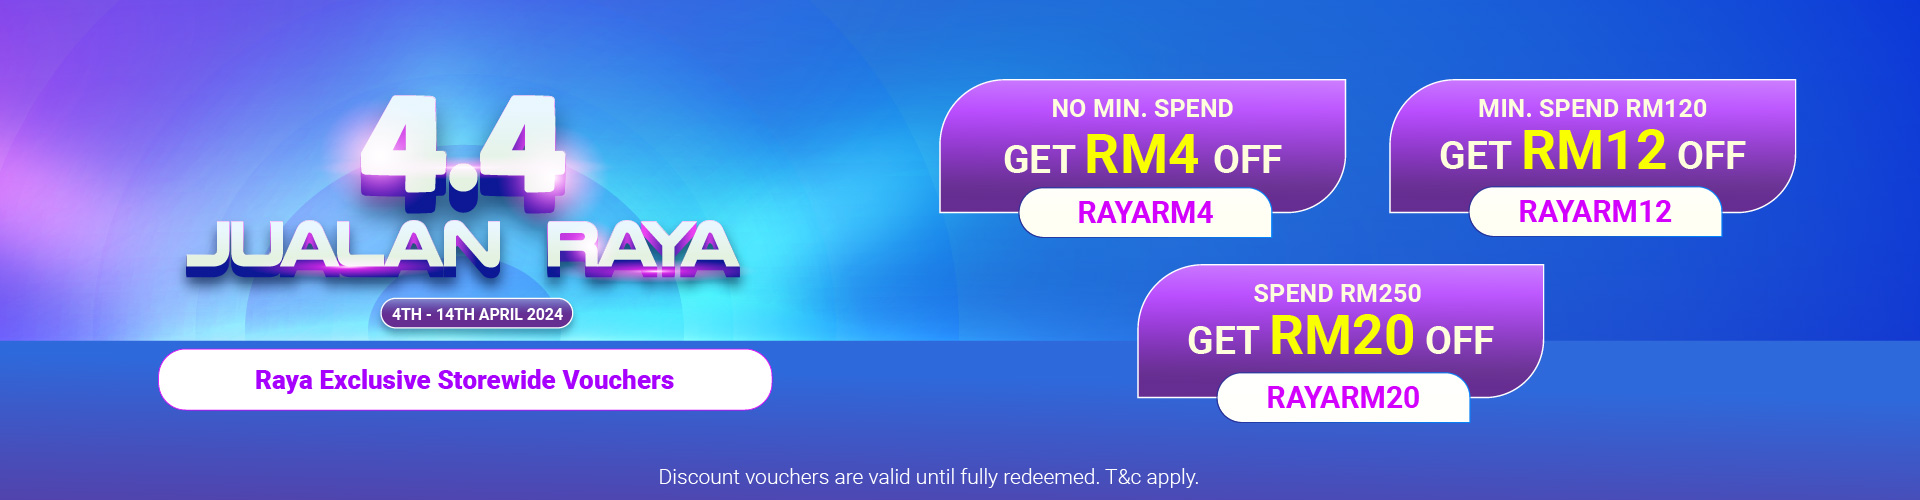 Raya Exclusive Vouchers